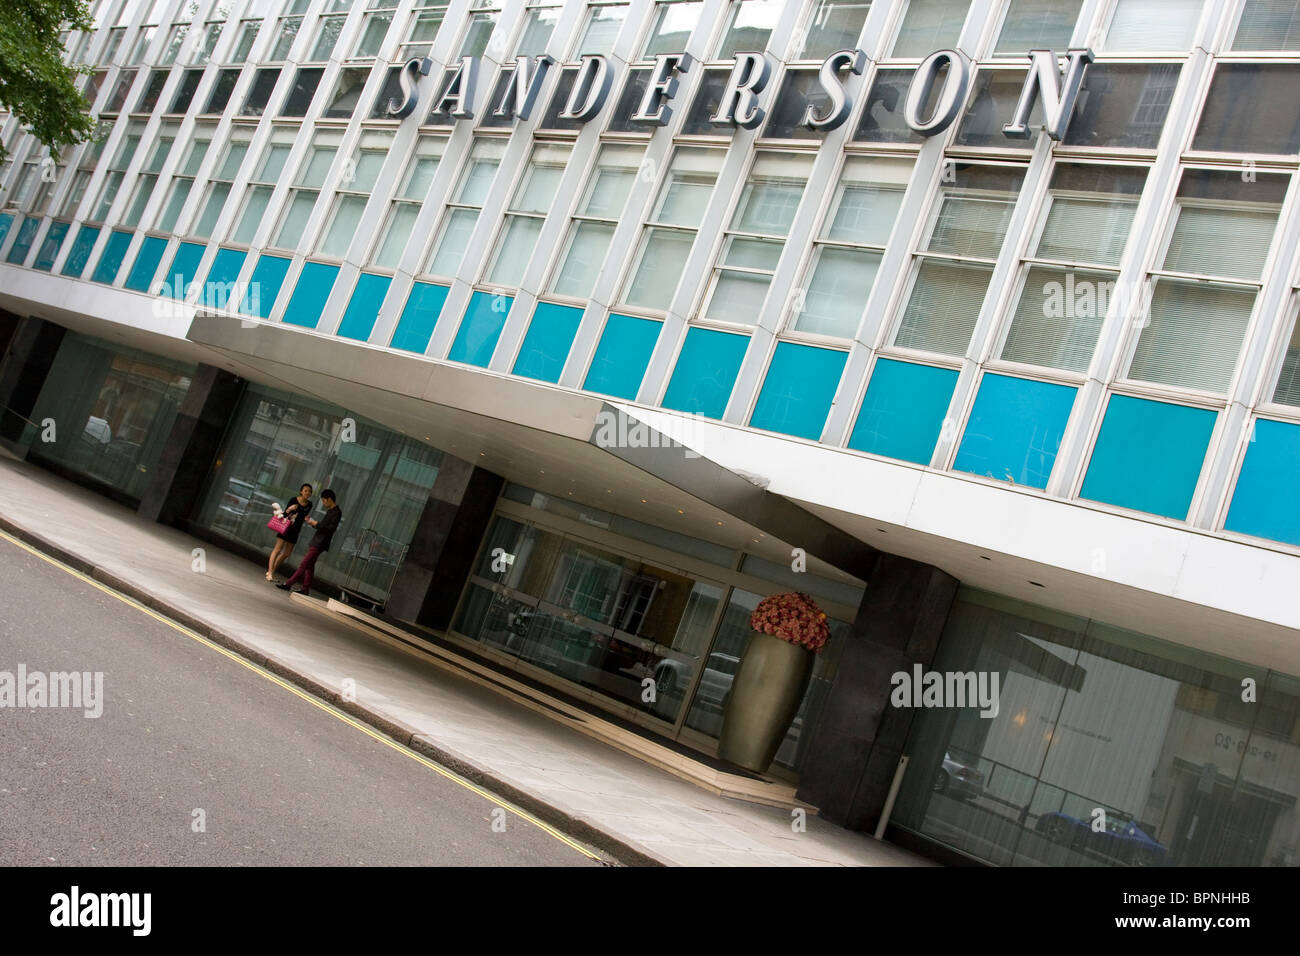 Immagine esterna del Sanderson Hotel in Berners Street, Londra. Foto Stock